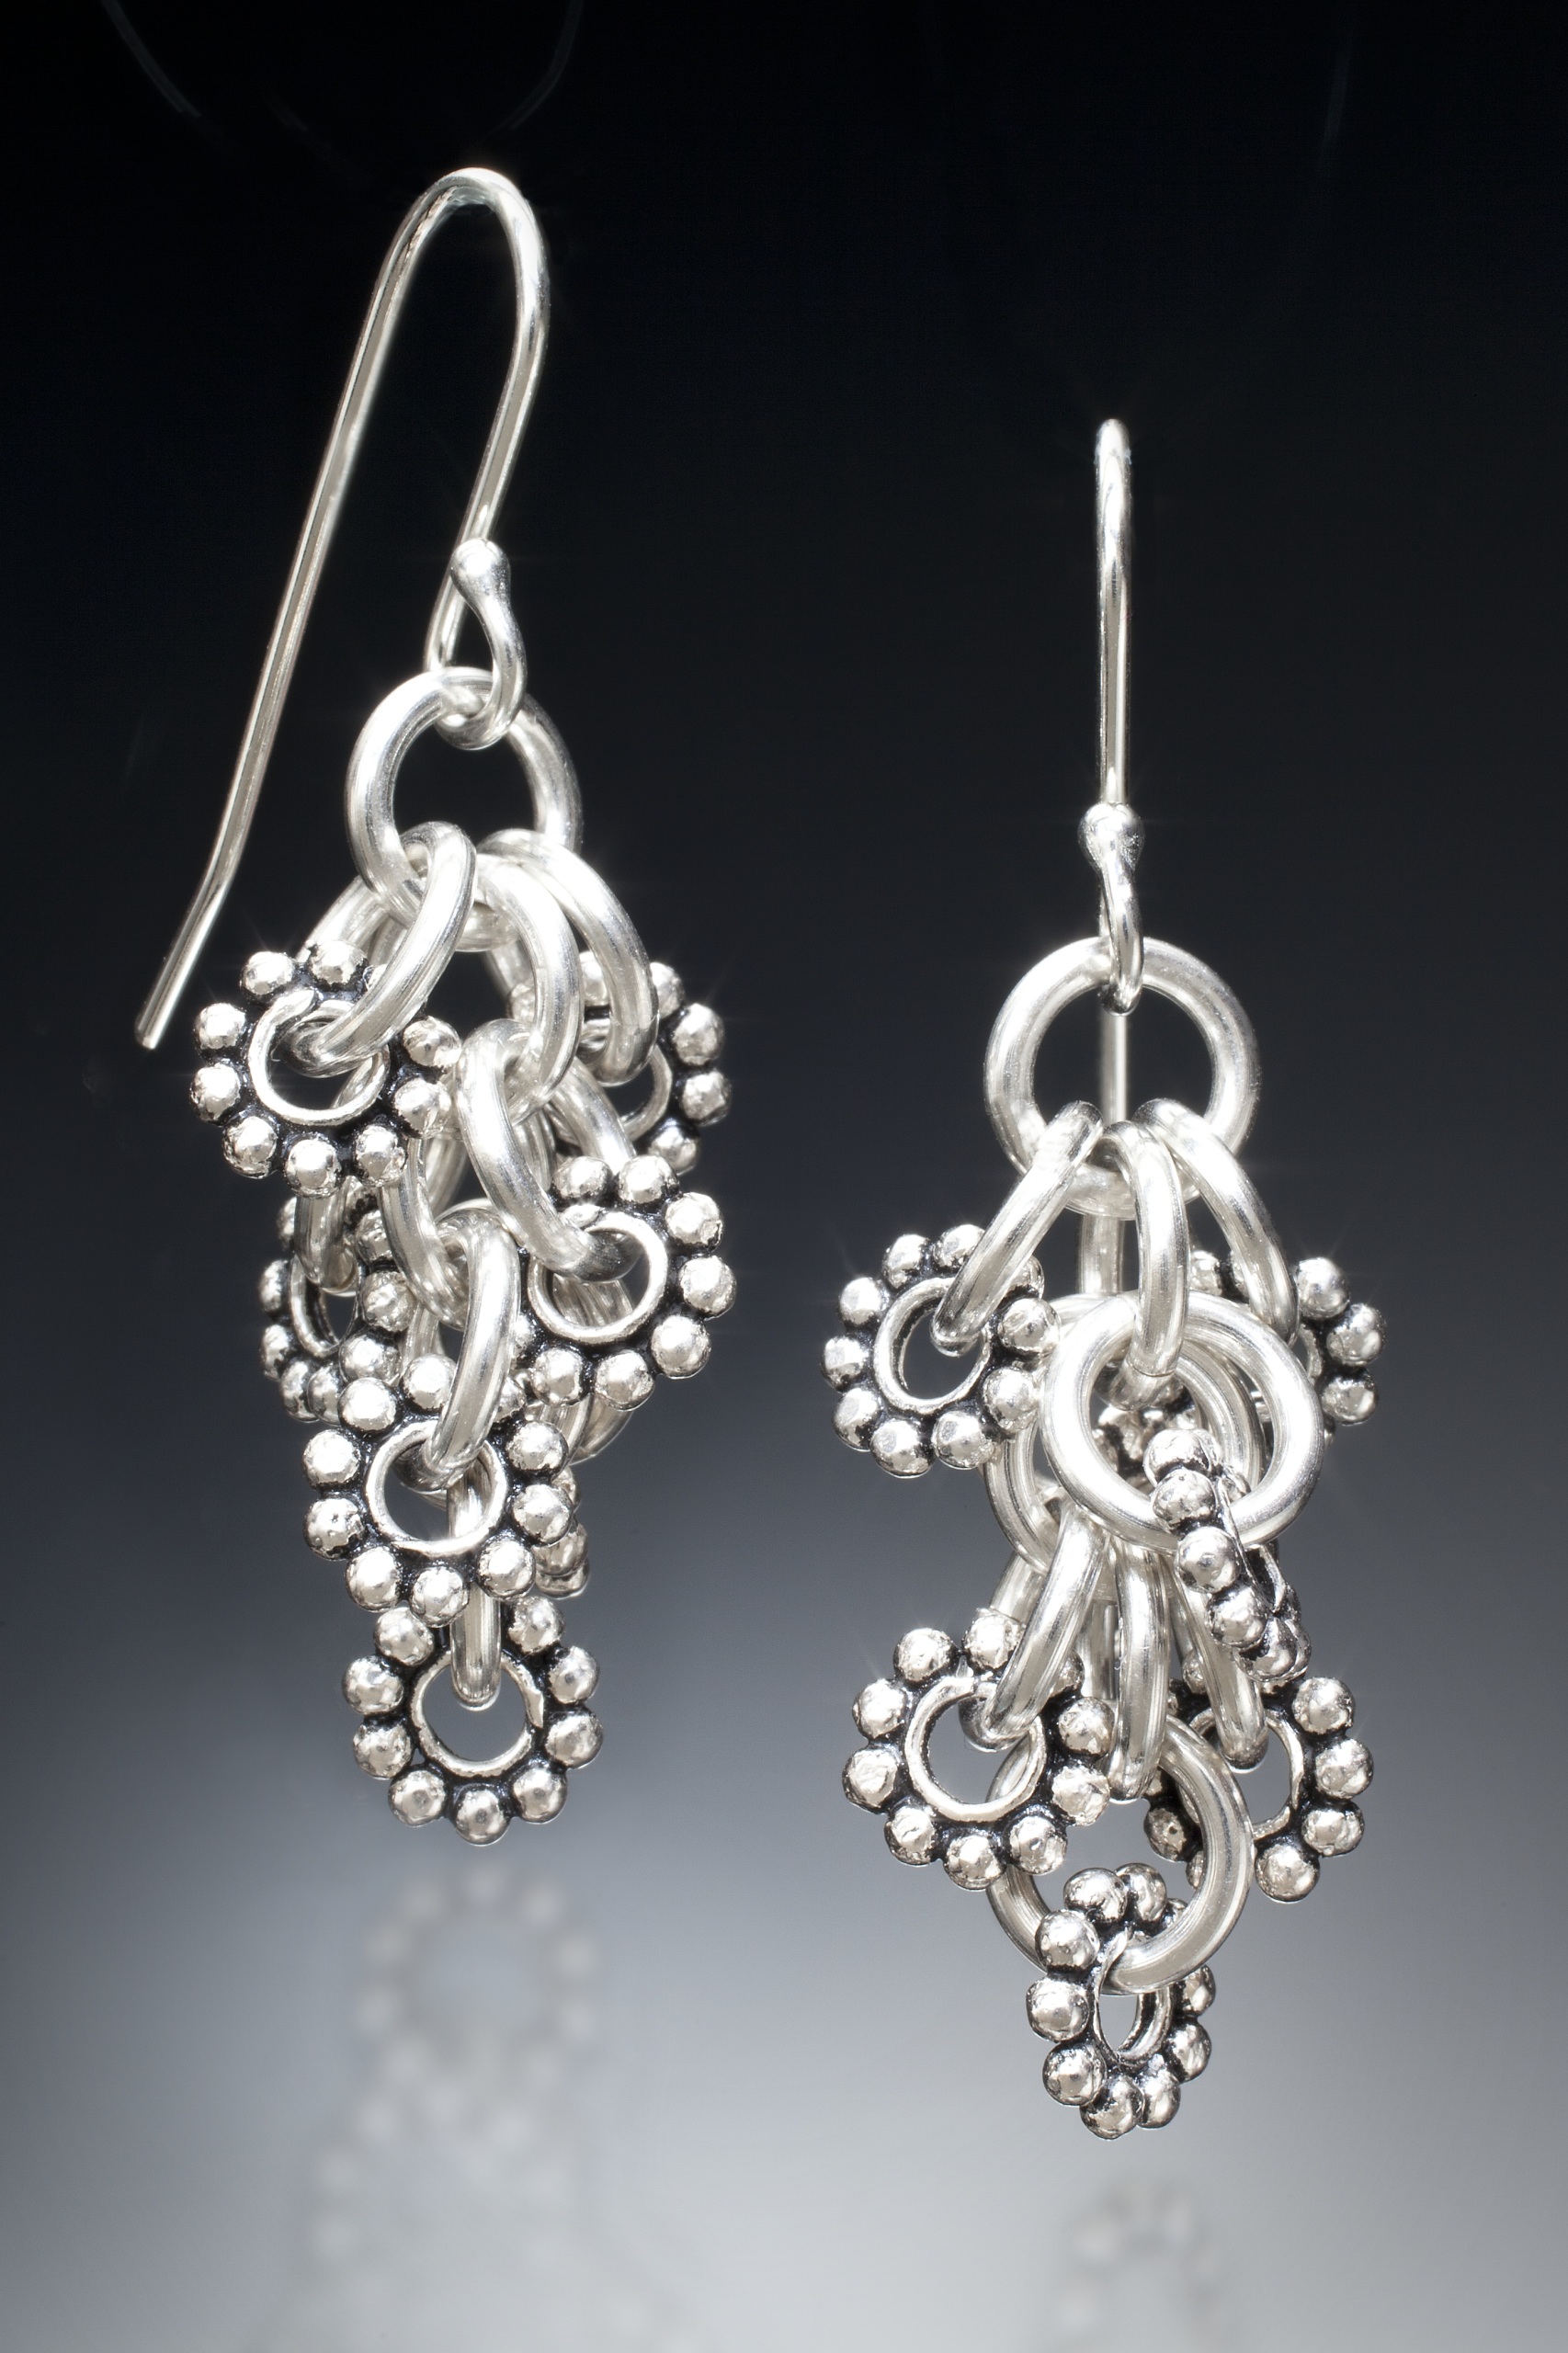 handmade sterling silver earrings